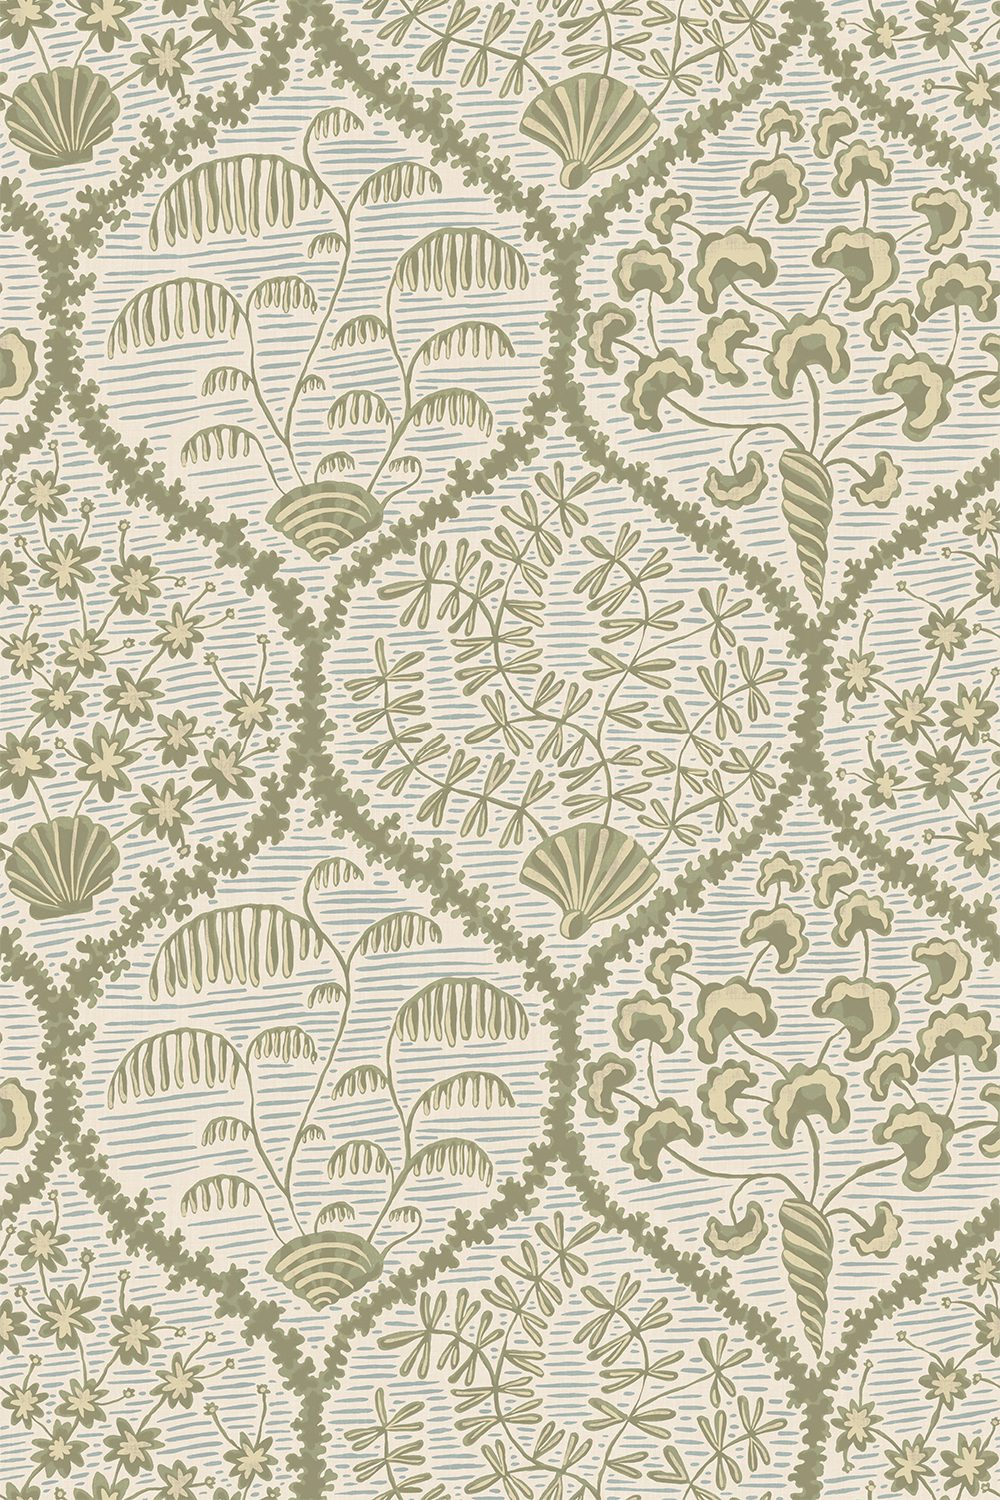 Josephine-Munsey-Wallpaper-Sowerby-SOft-Olive-shortwood-beighe-pattern-seashells-flora-ogee-tradtional-pattern-hand-illustrated-printed-British-designer